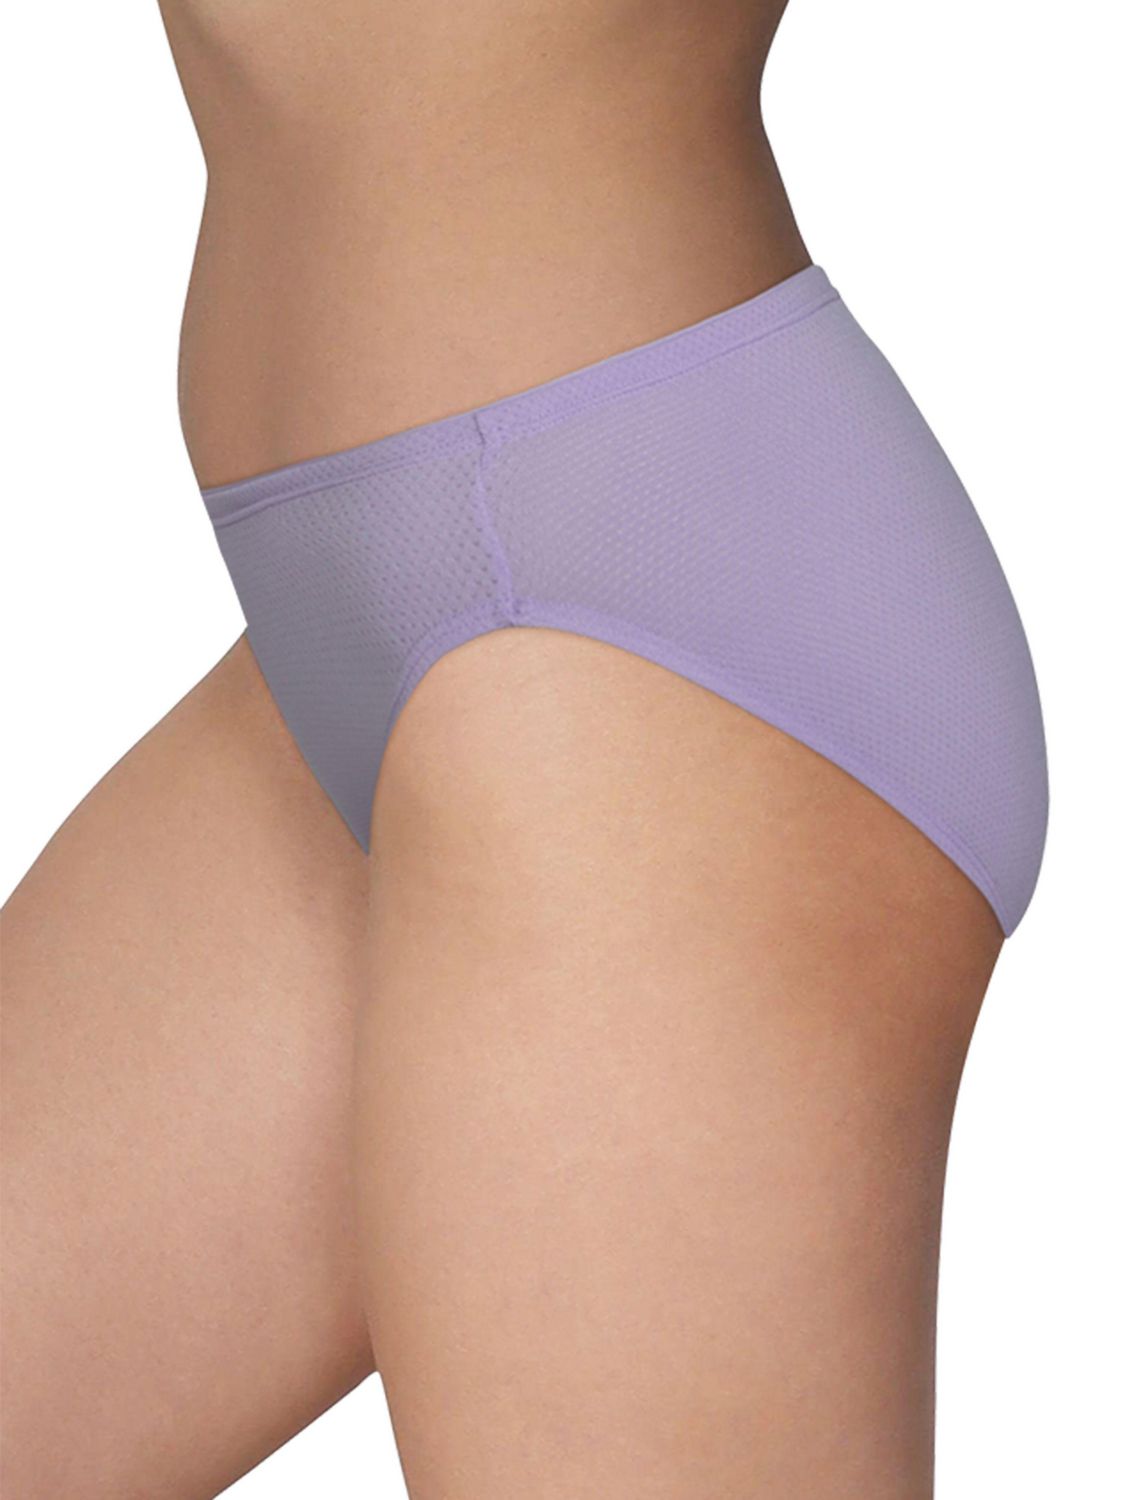 Fabiurt Women's Underwear Women's 5 Piece Mixed Color Summer Thin